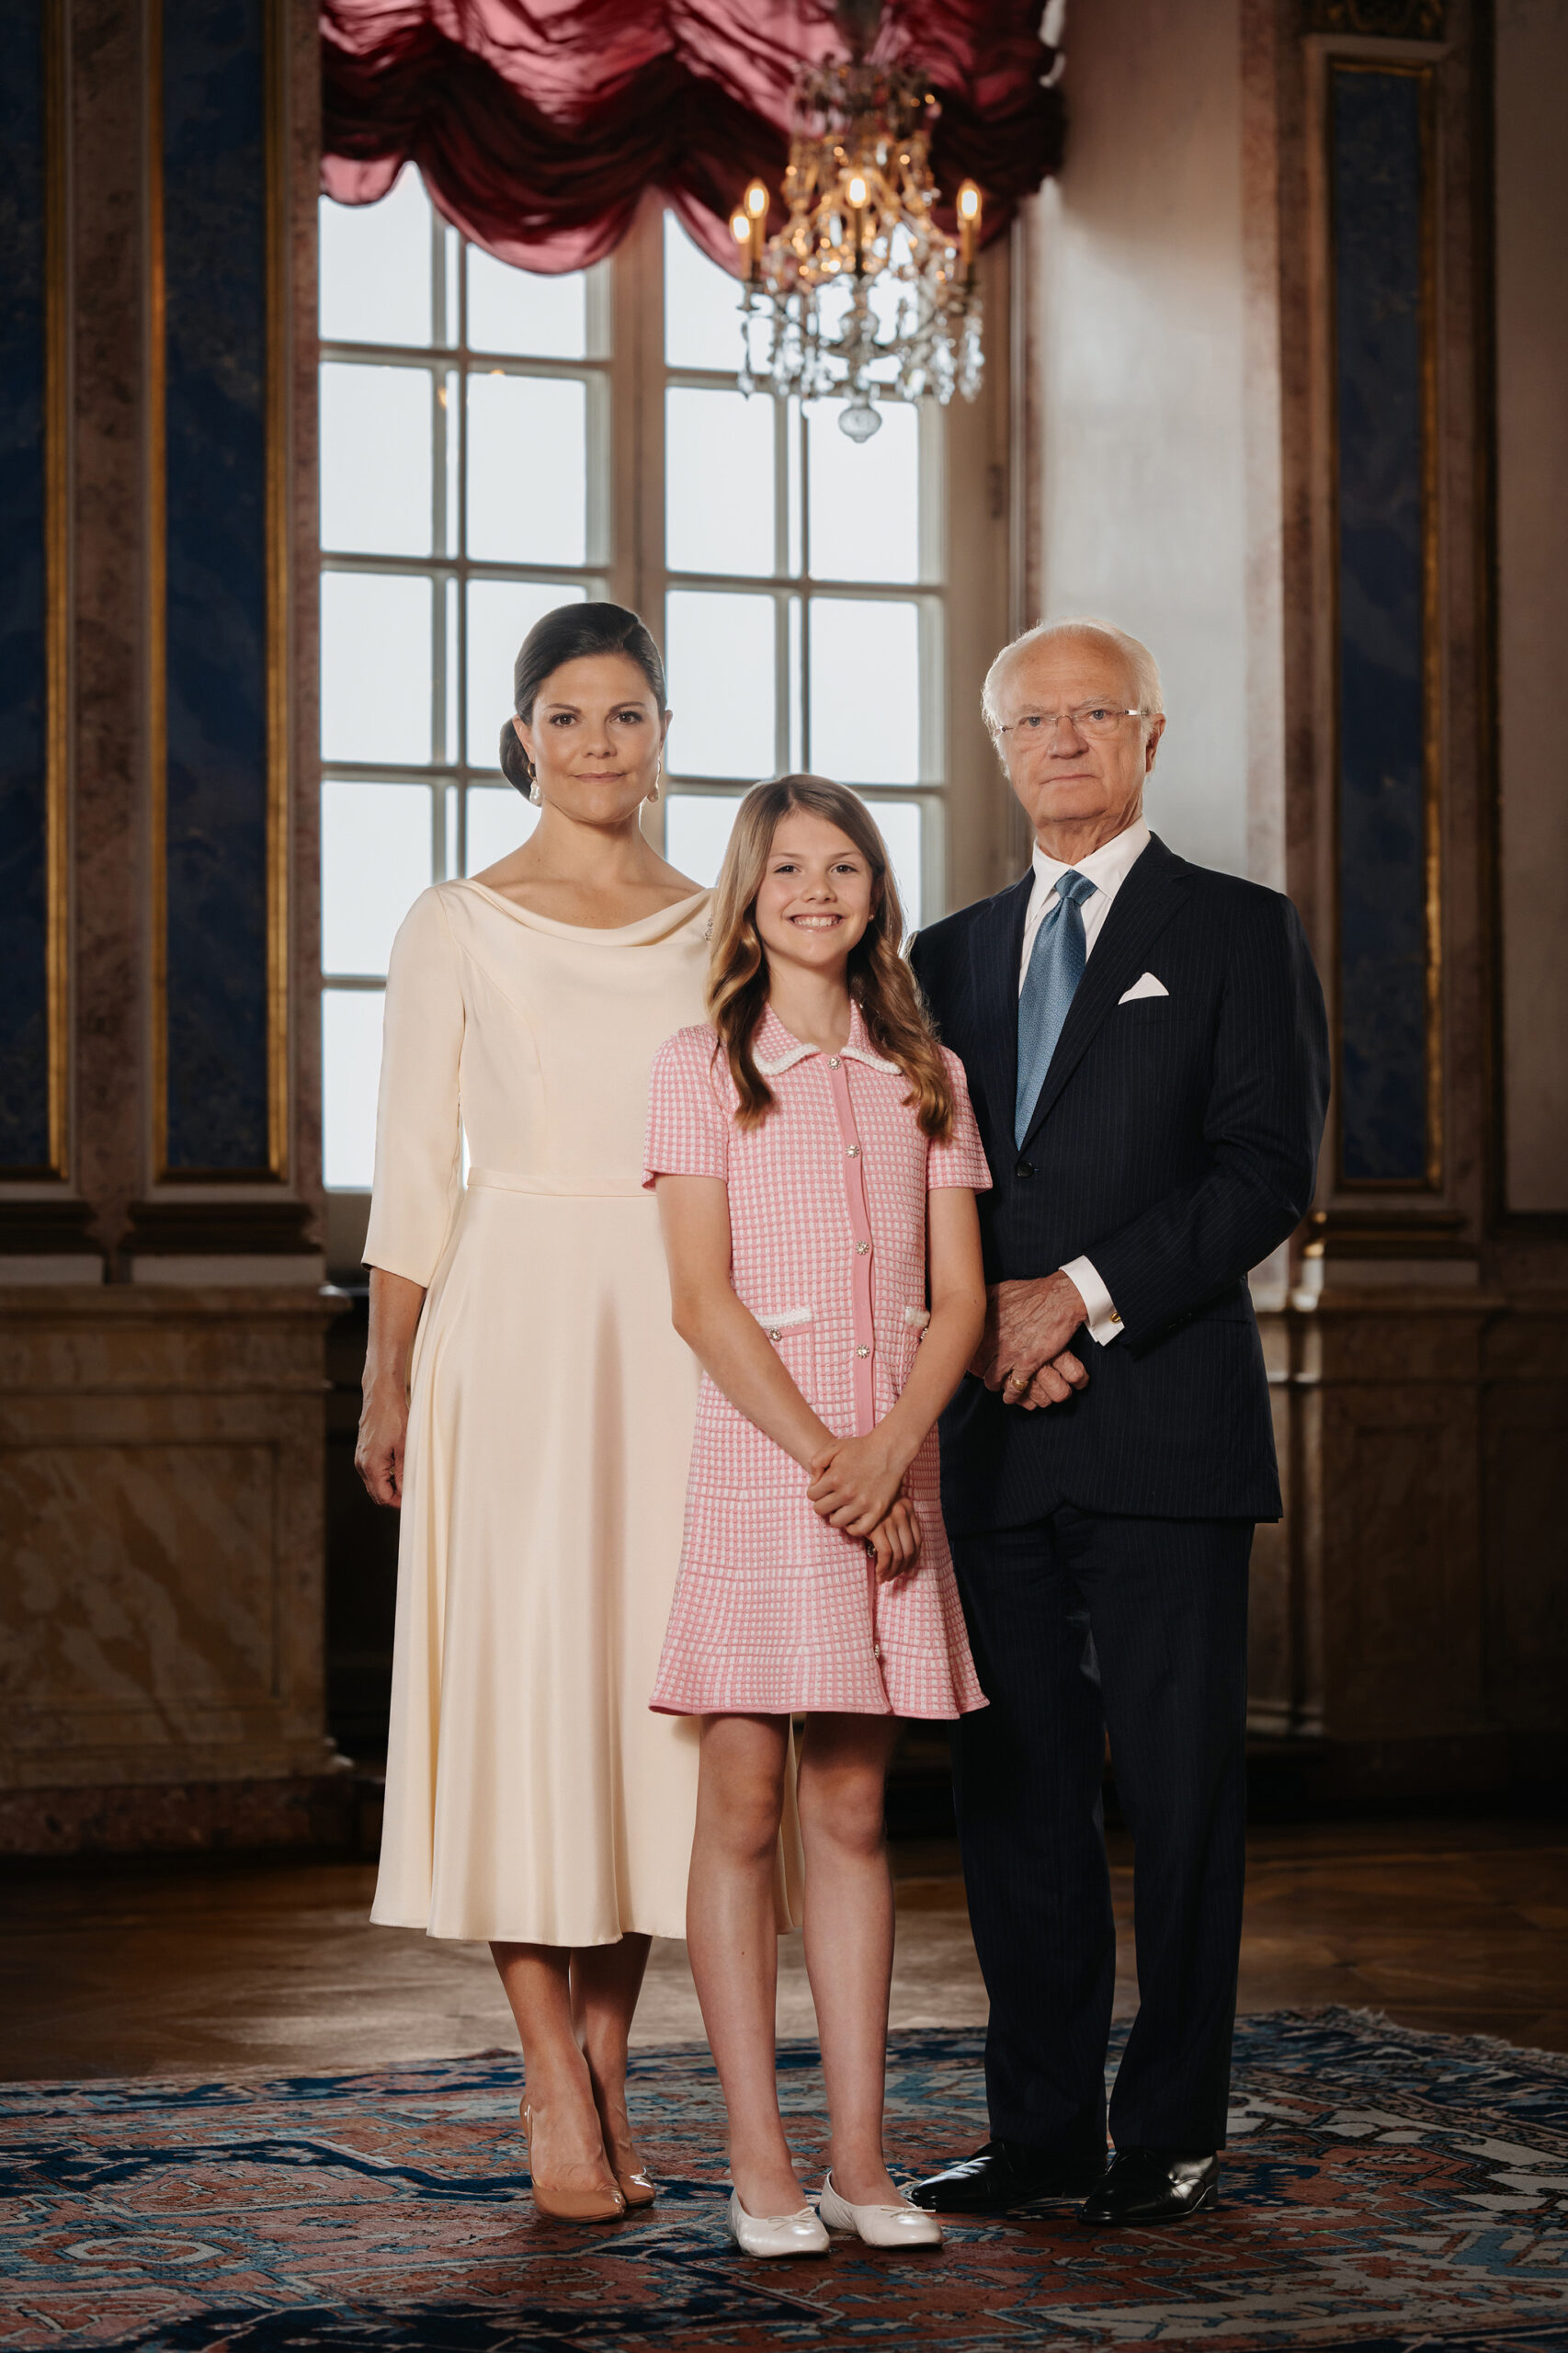 The Swedish monarchy